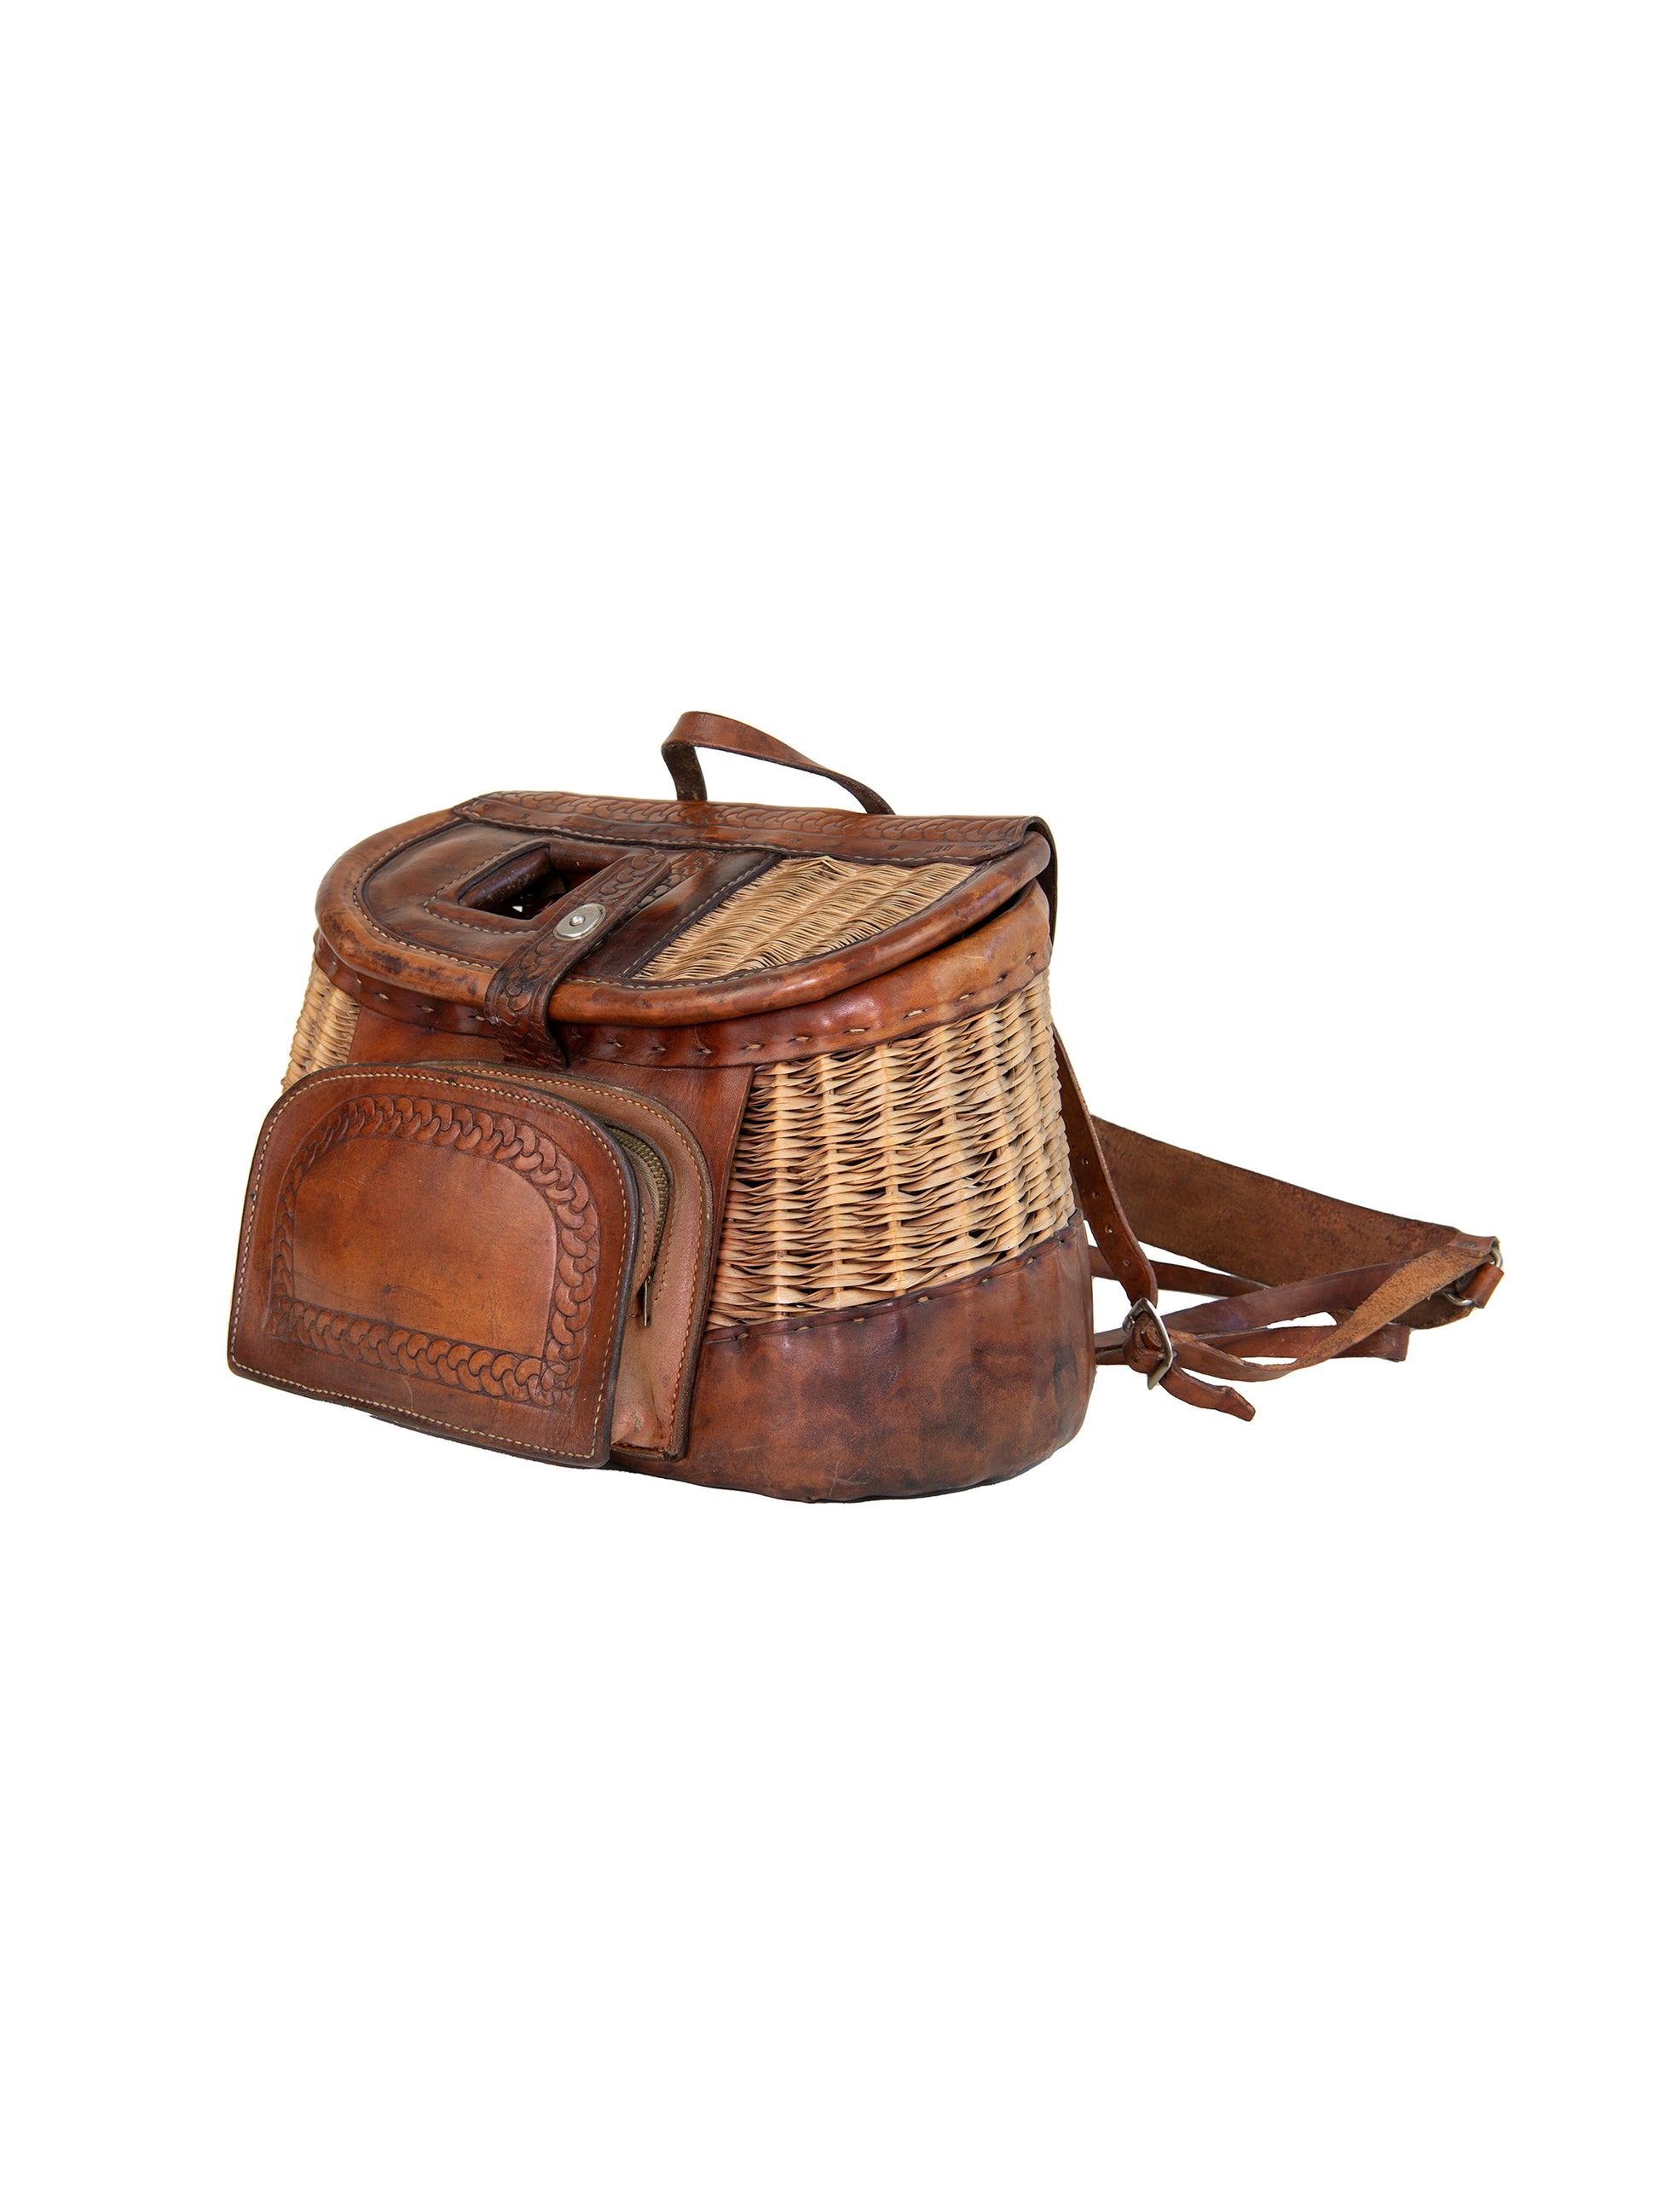 Authentic Vintage Kreel, Fish Basket. Tooled Leather Strap